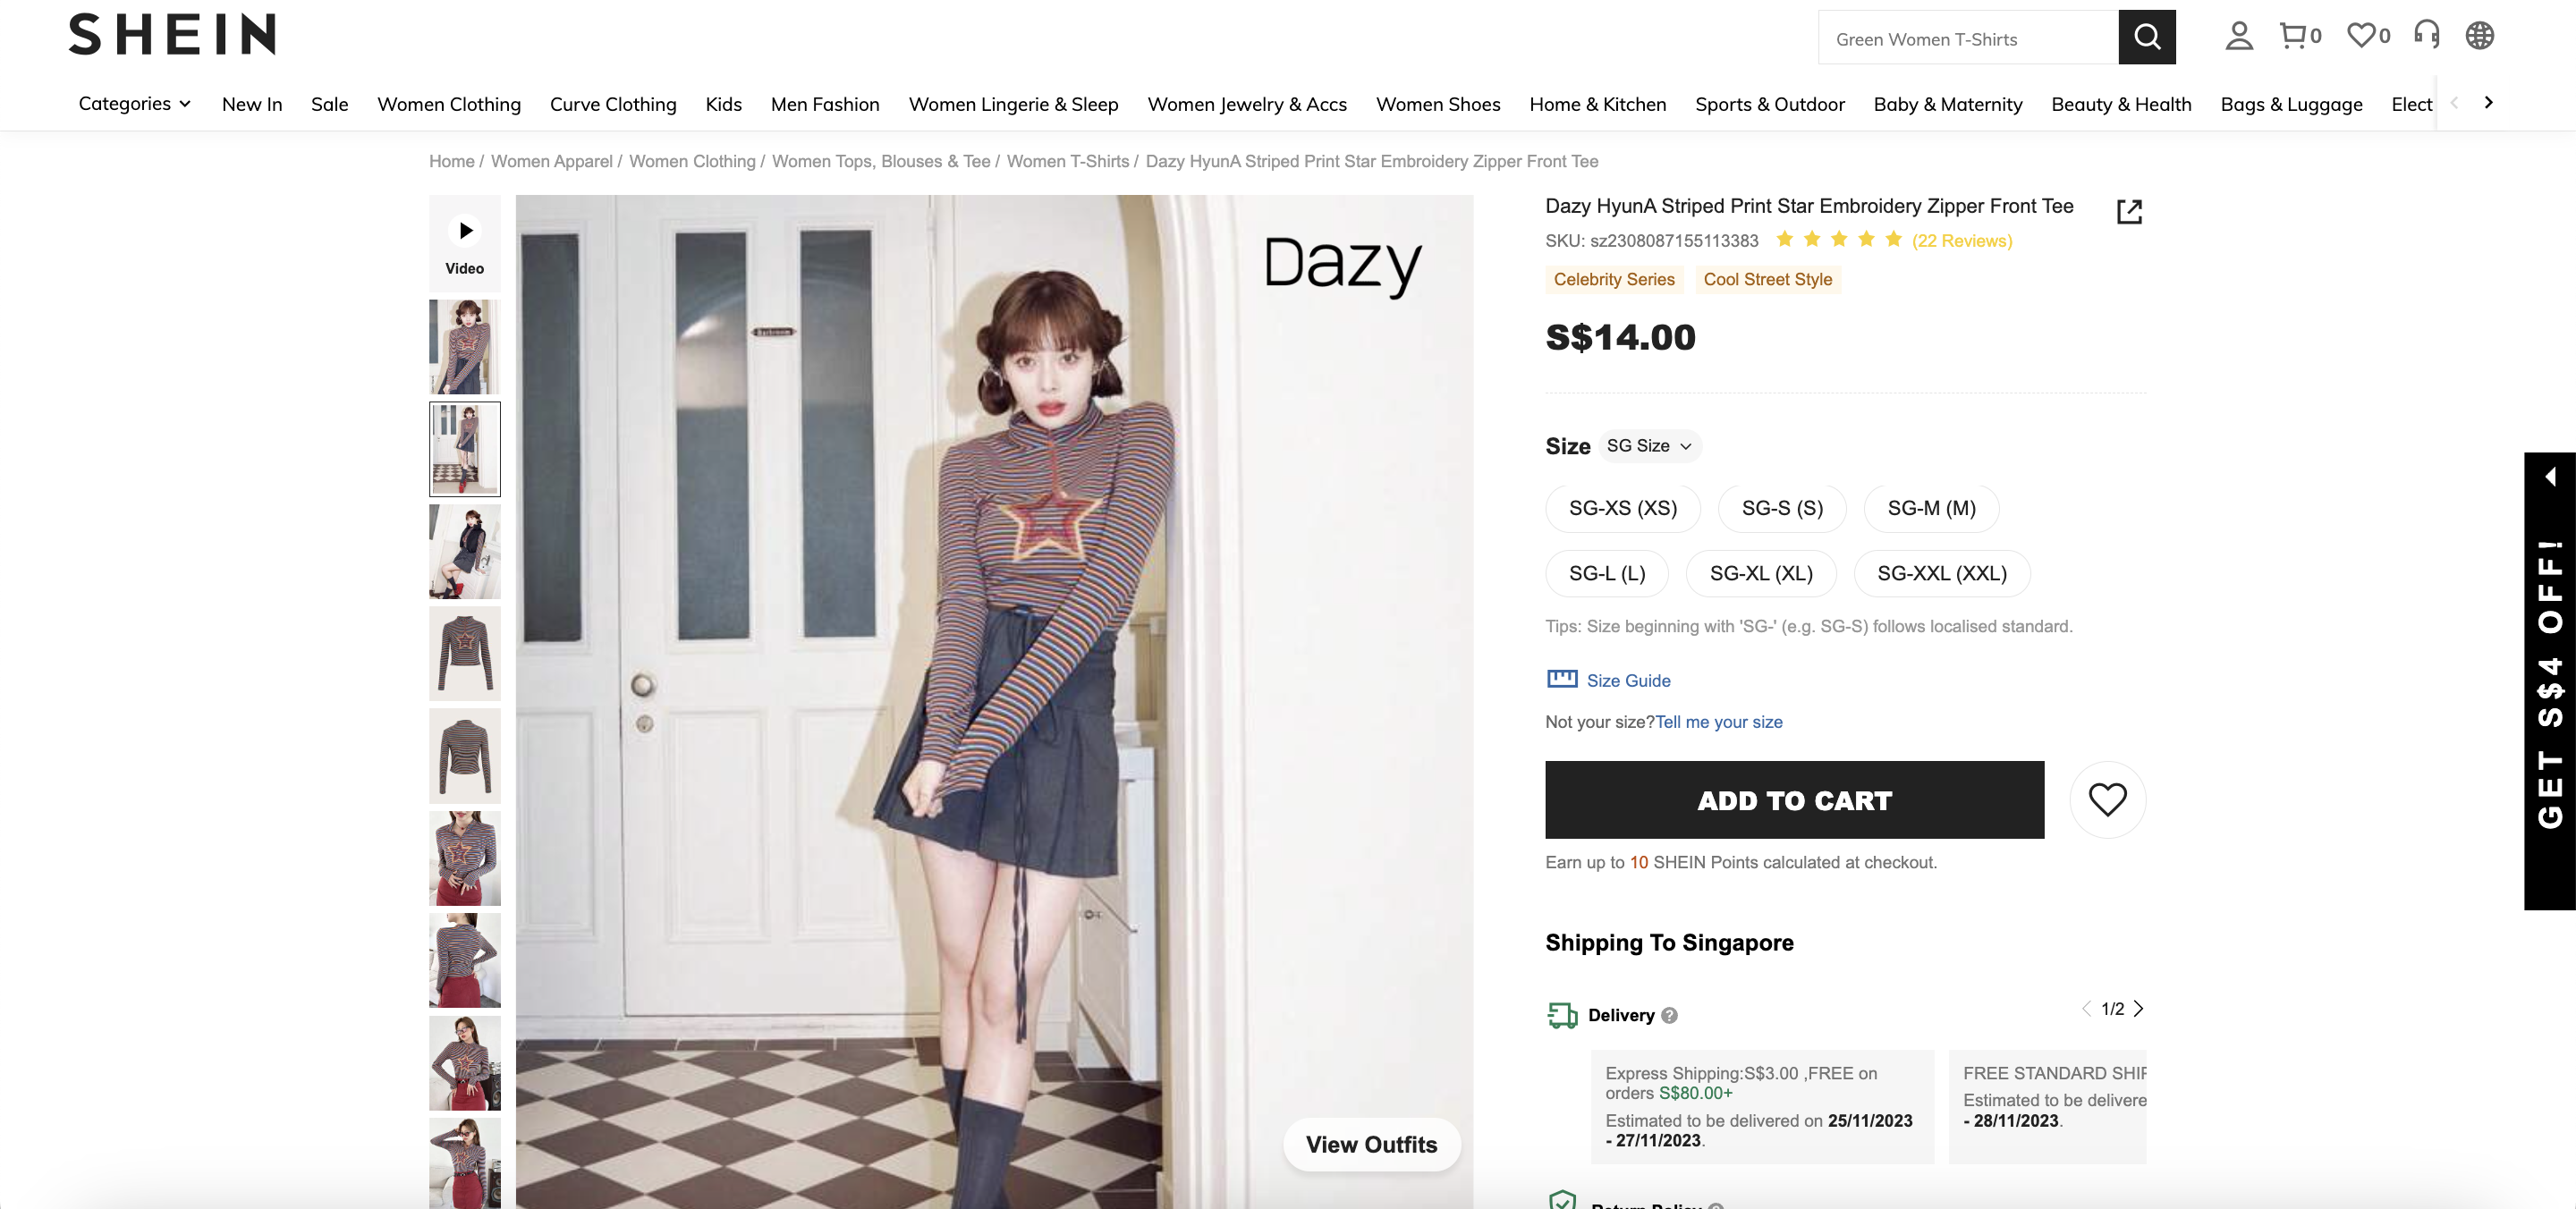 Dazy HyunA Striped Print Star Embroidery Zipper Front Tee